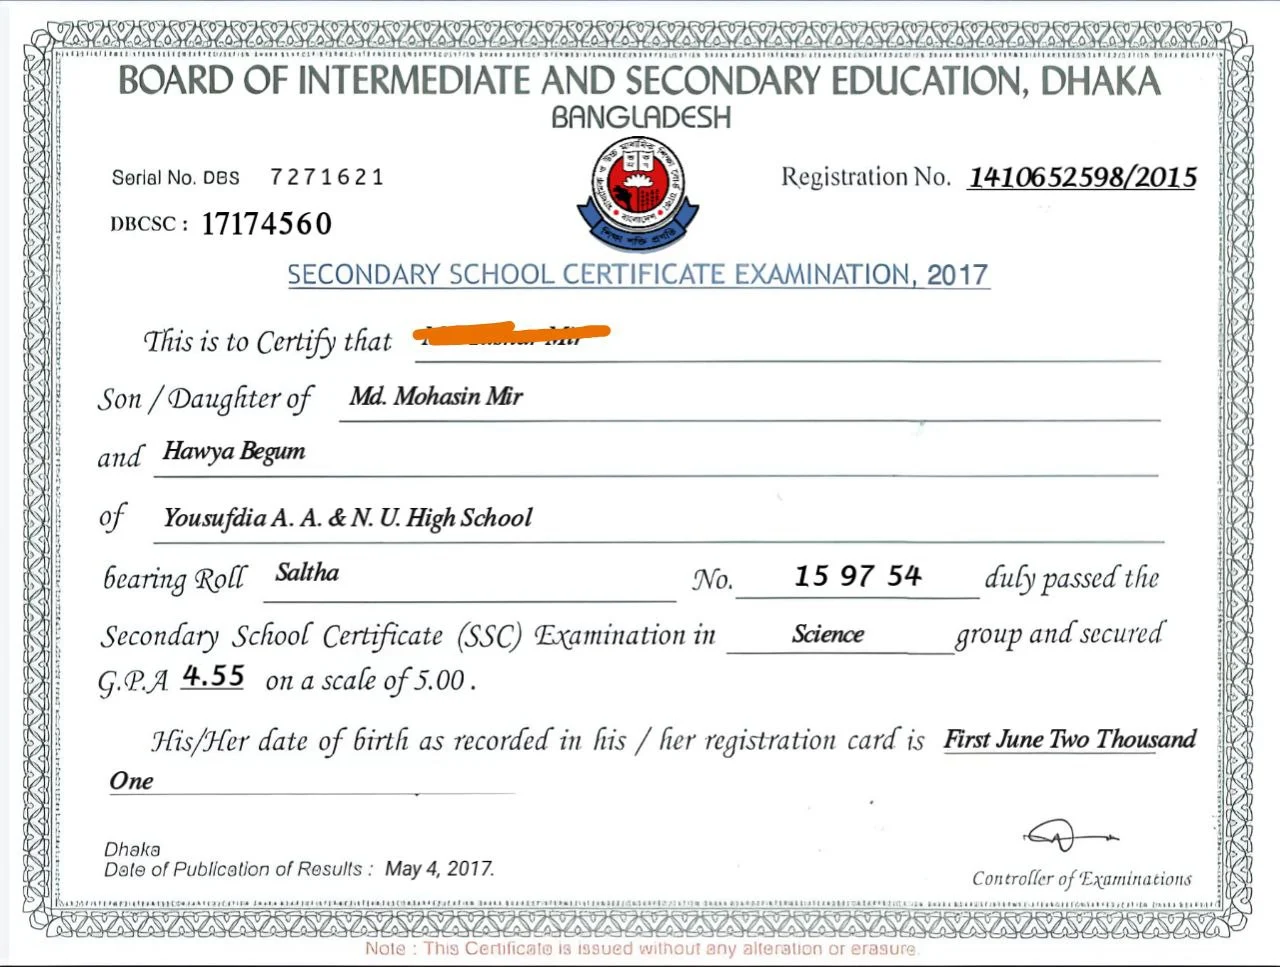 SSC Certificate  PLP File Download